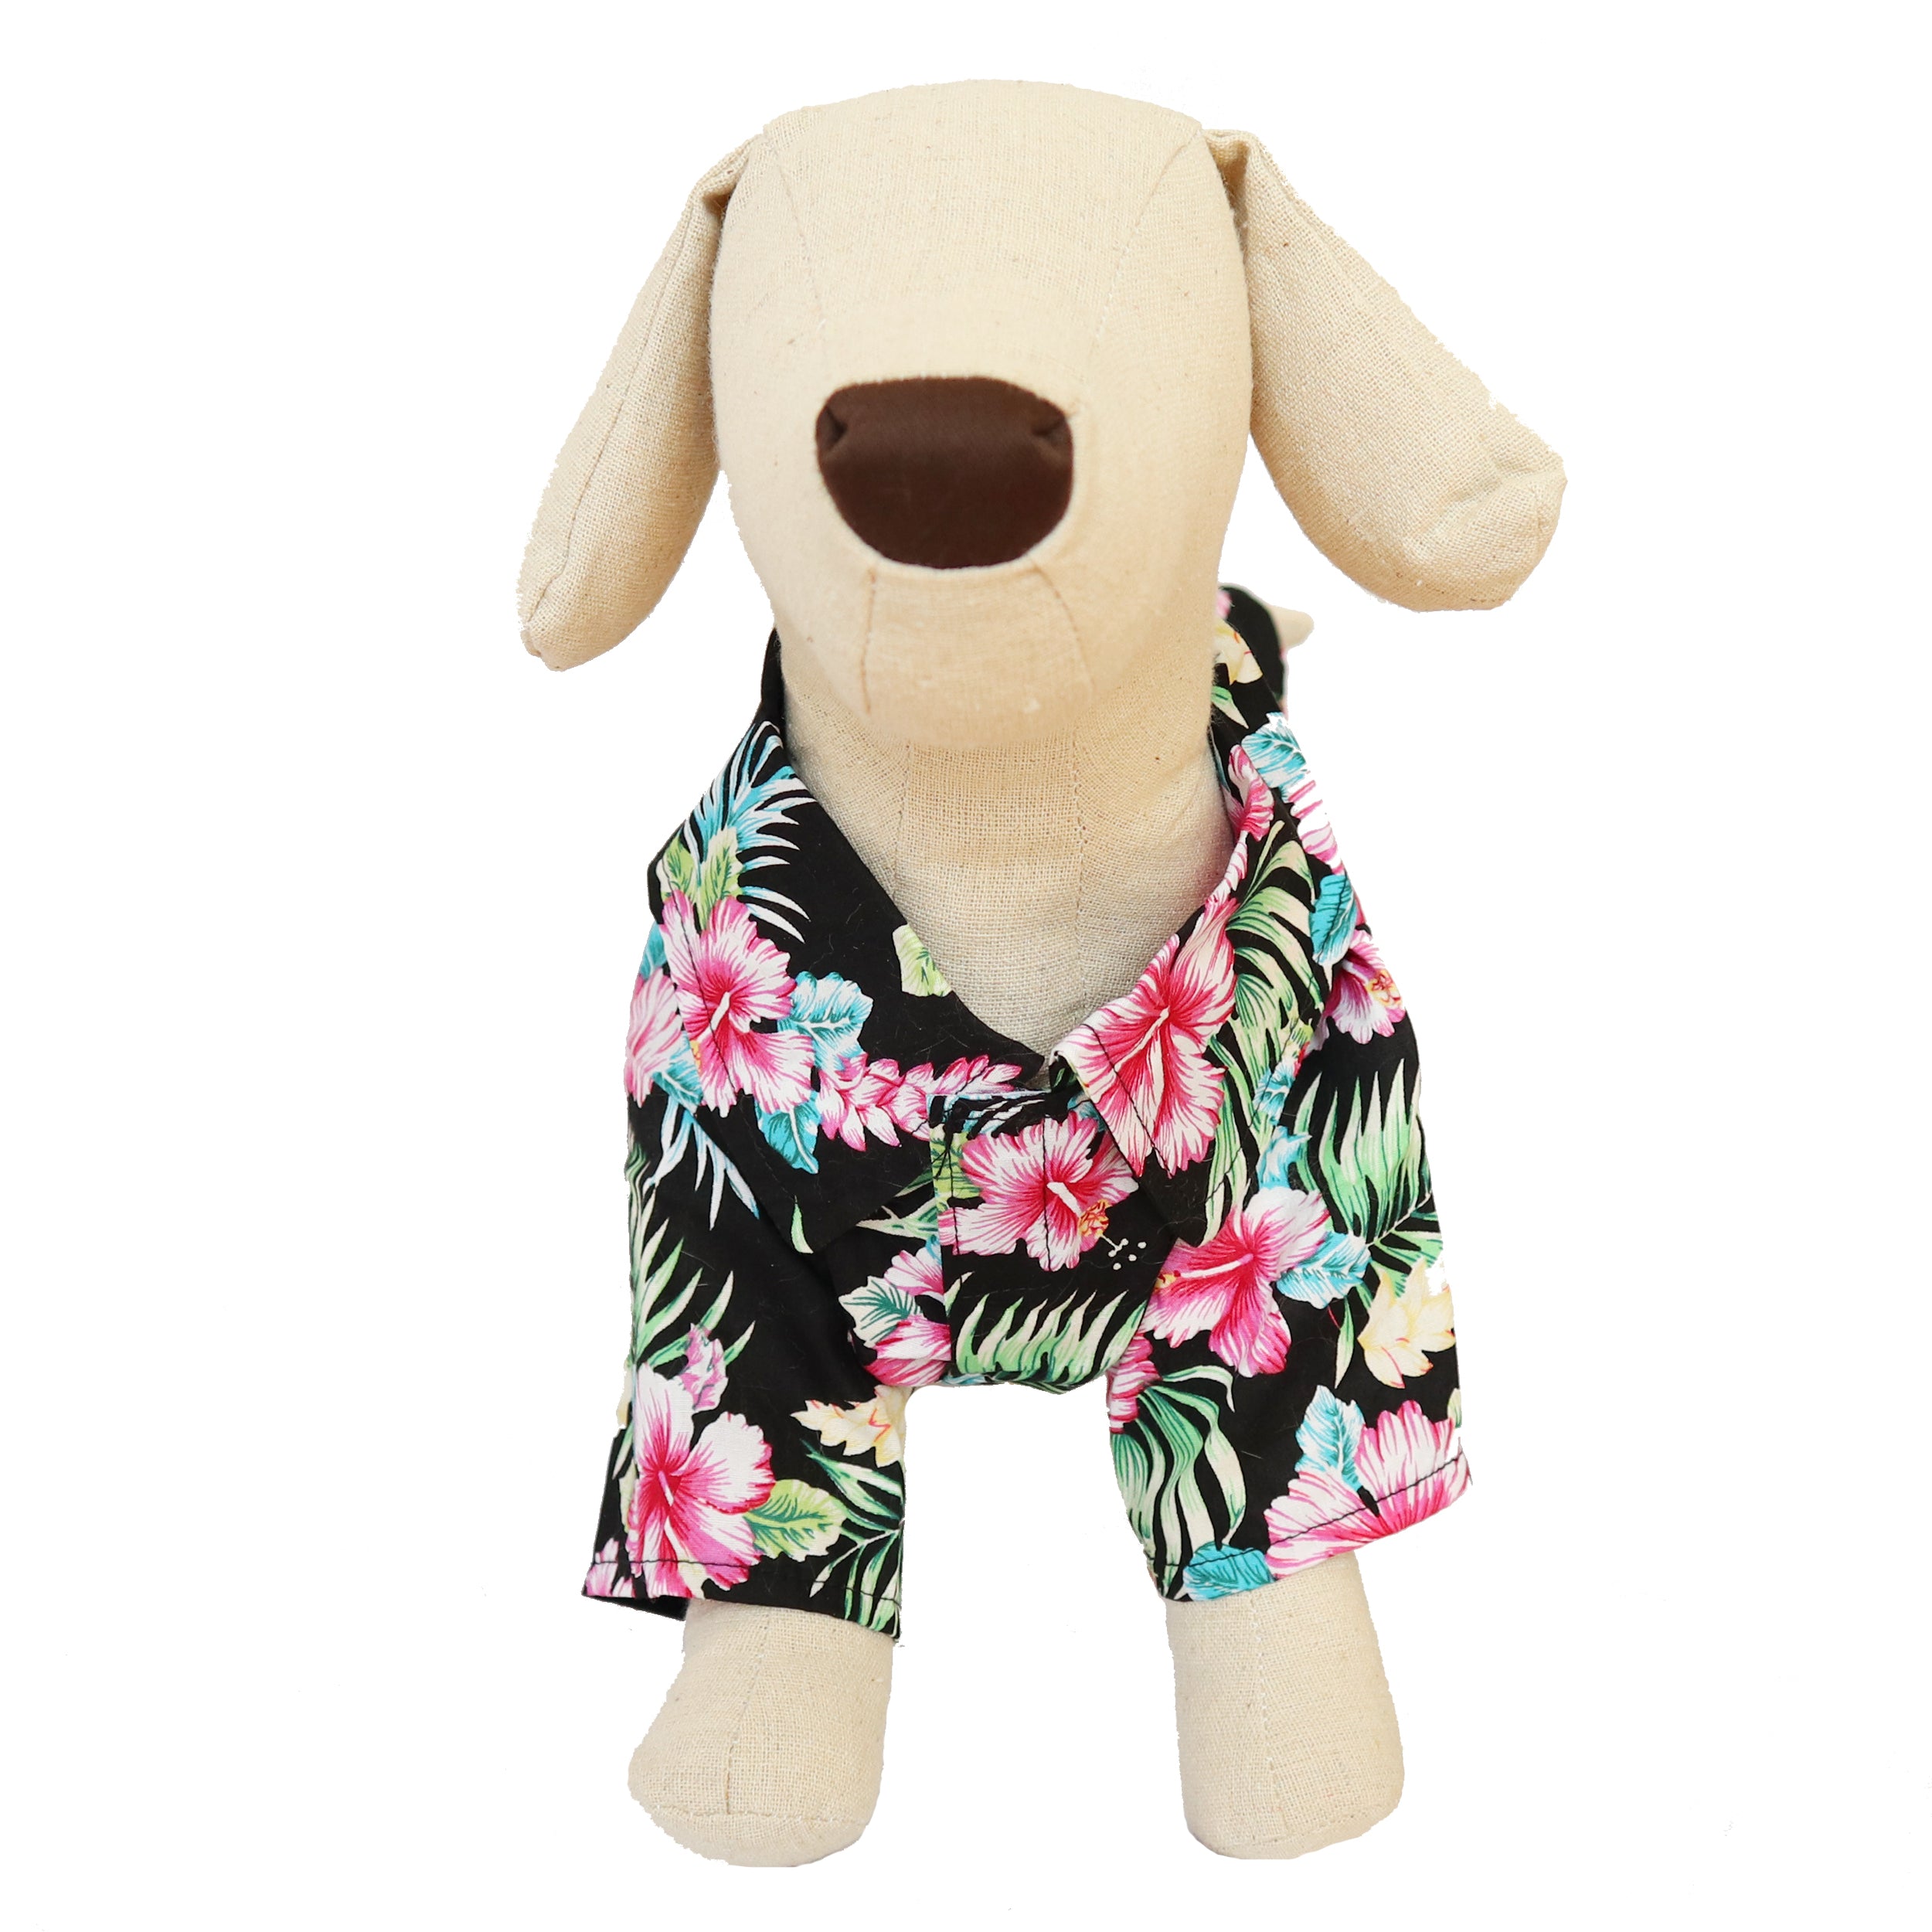 Casual Canine Black & Tropical Floral Hawaiian Breeze Camp Shirt